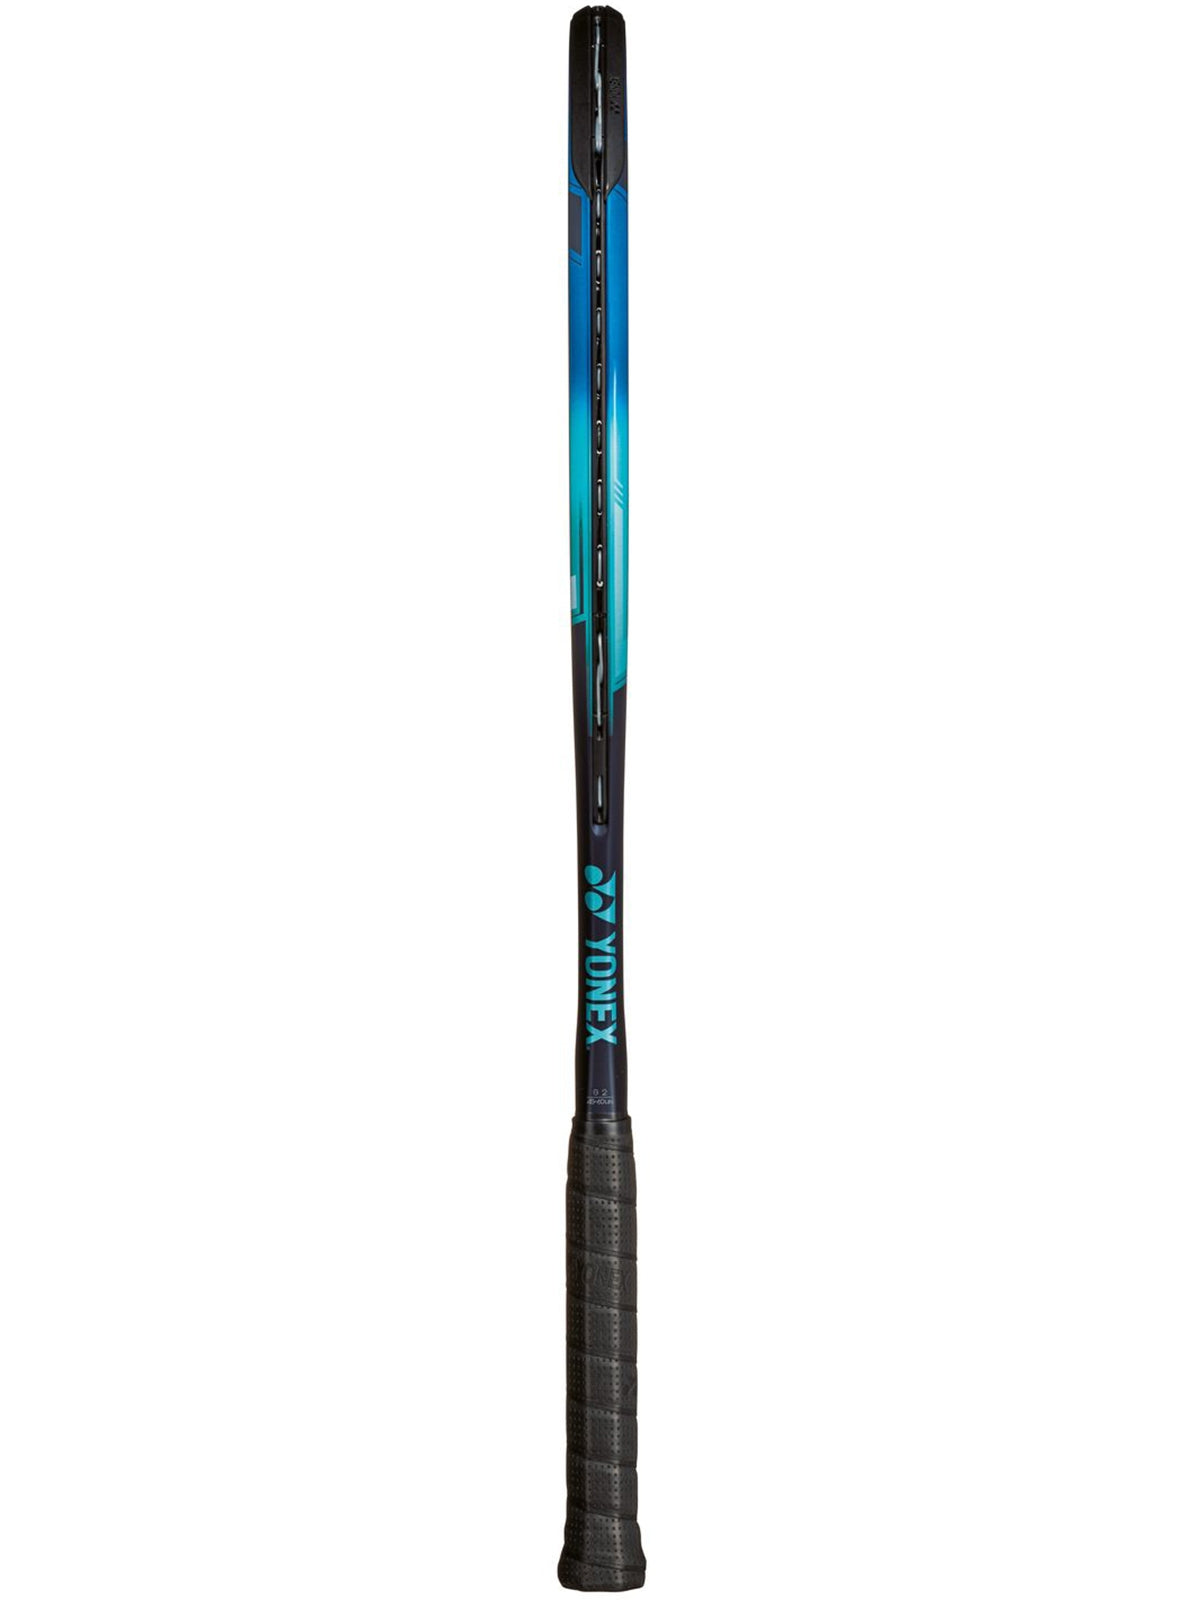 Racchette Unisex Yonex - EZONE 98 (305 gr) - Blu